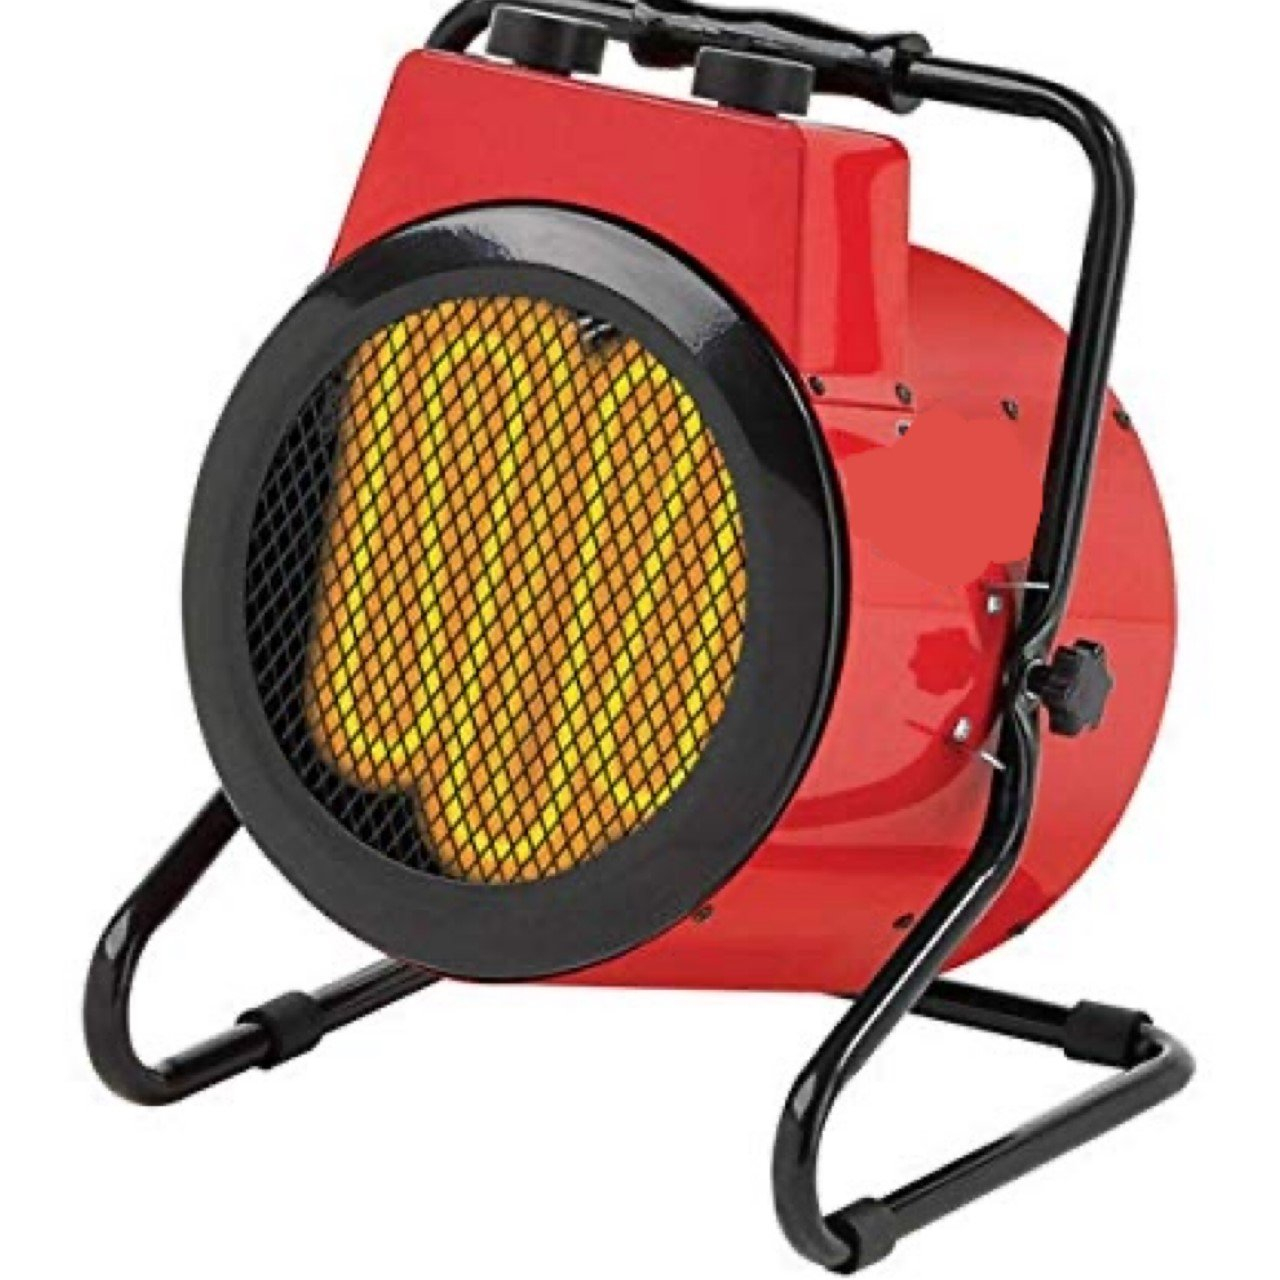 Devil 3kw Industrial Electric Fan Heater 230v Rps Ltd intended for proportions 1280 X 1280